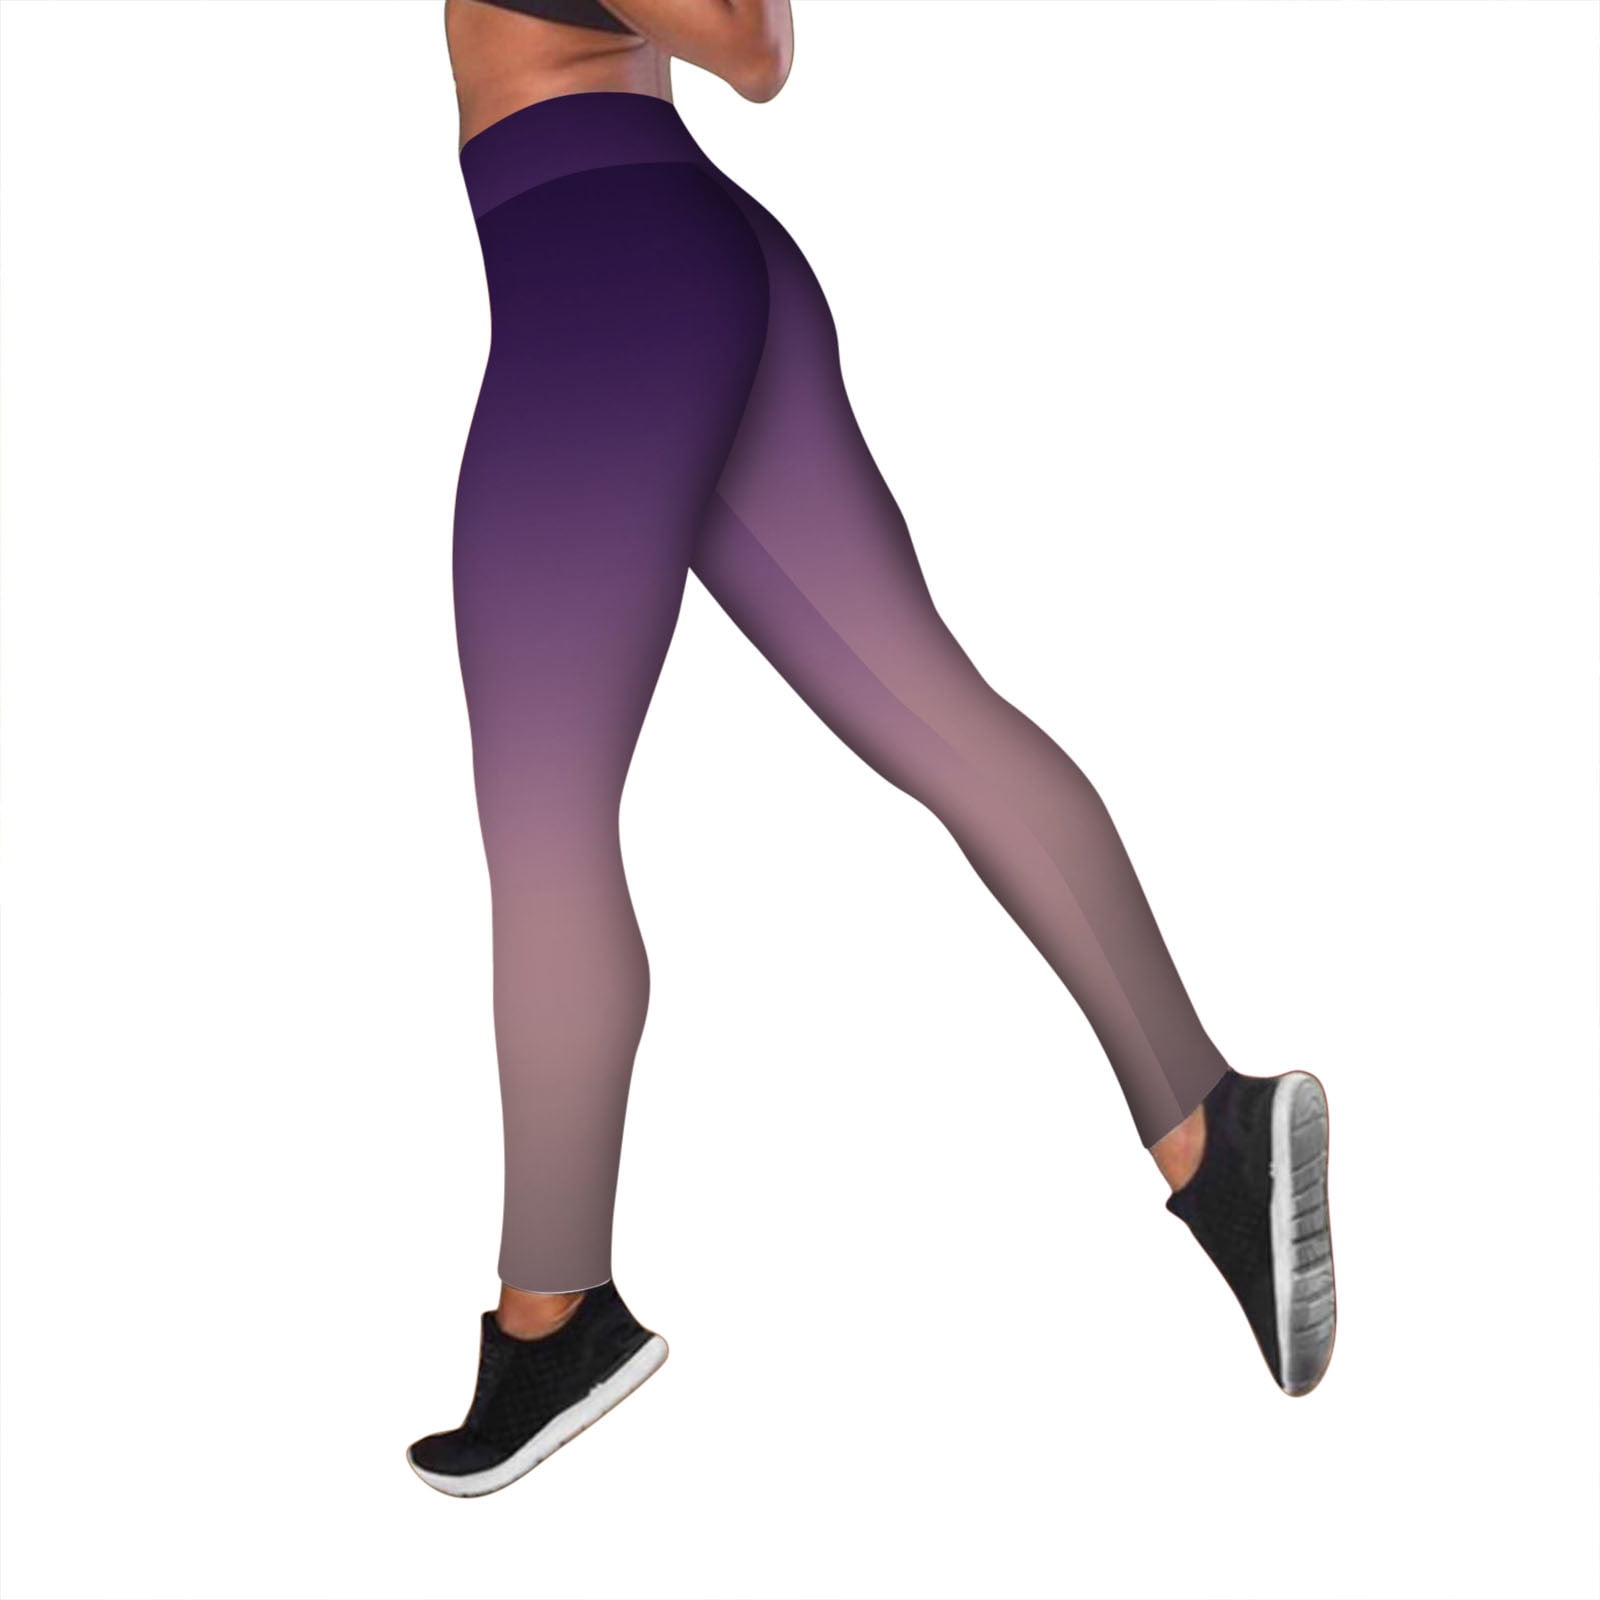 Gaiam Dark Purple High Waisted Leggings Yoga Pants Workout